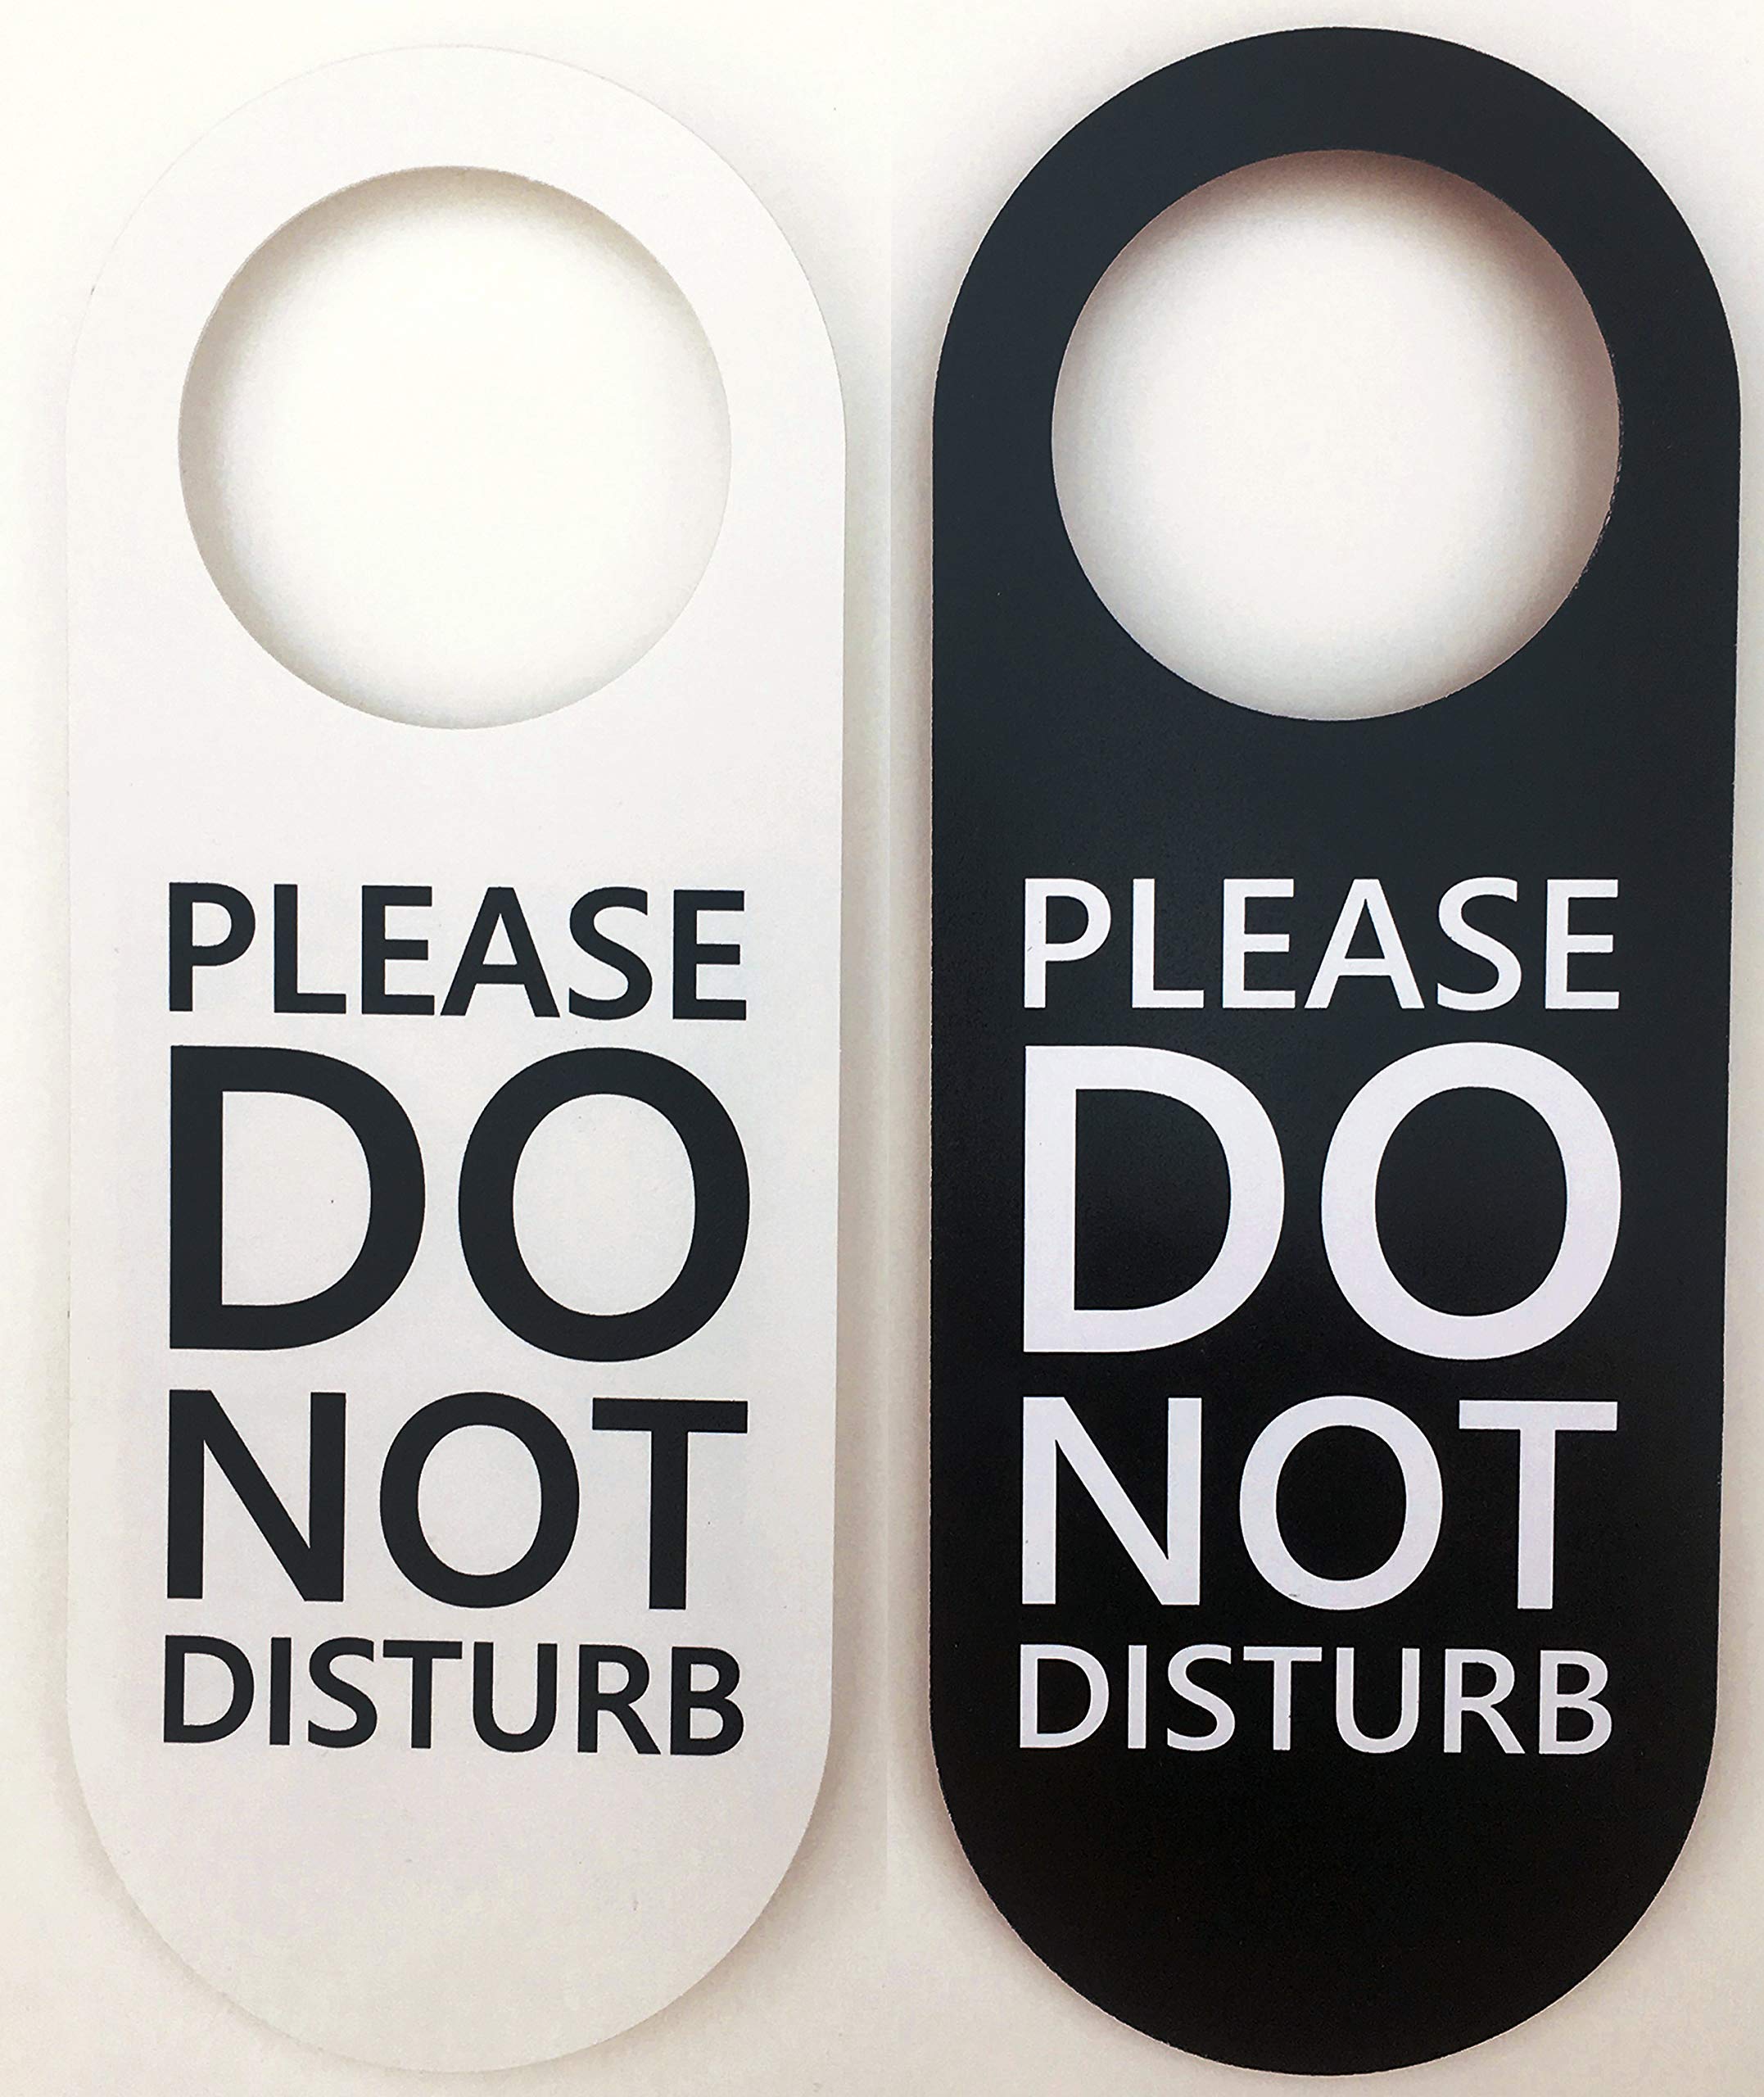 A door with a do not disturb sign